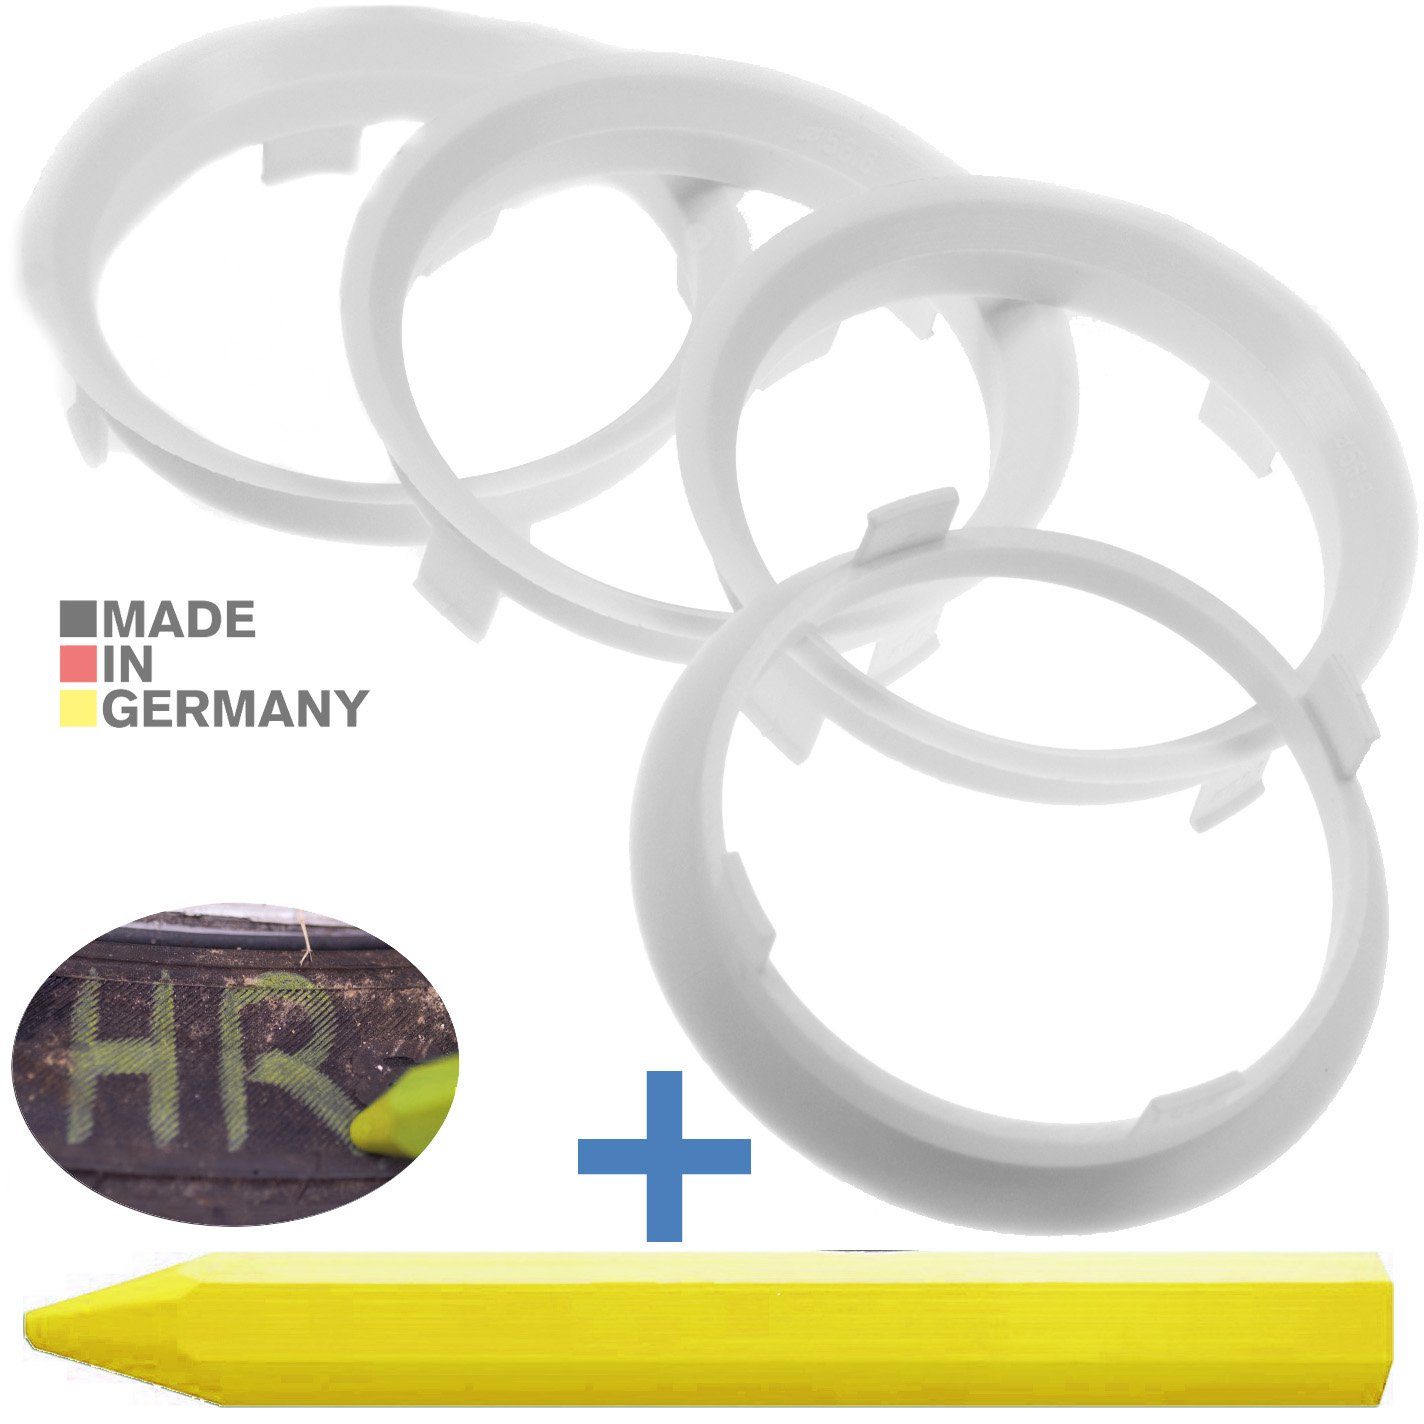 RKC Reifenstift 4X Stift Zentrierringe Reifen 1x + Felgen Kreide Weiss Fett Ringe